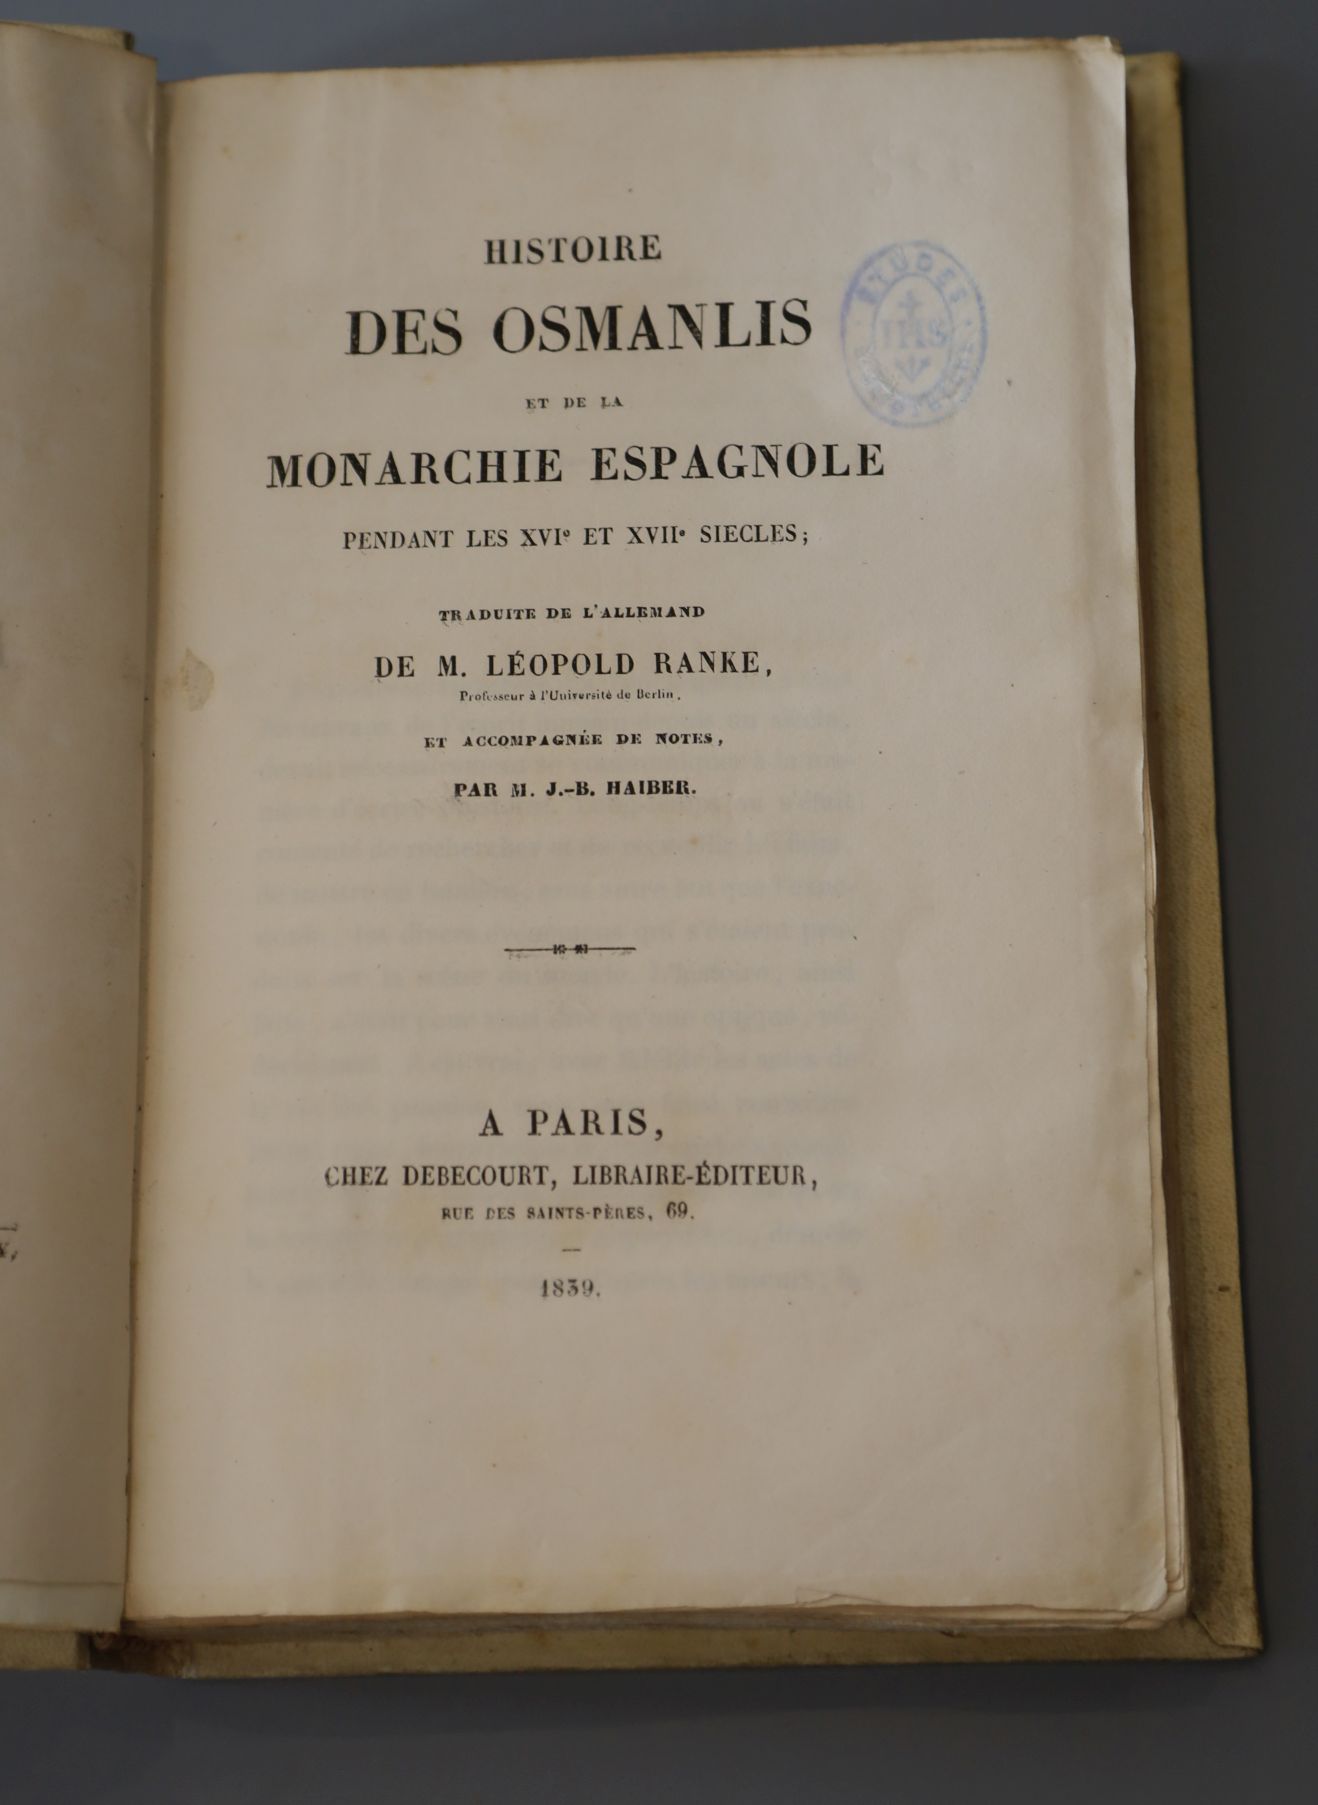 Ranke, Leopold - Histoire des Osmanlis, vellum, 8vo, library stamp to title page, Chez Debecourt,